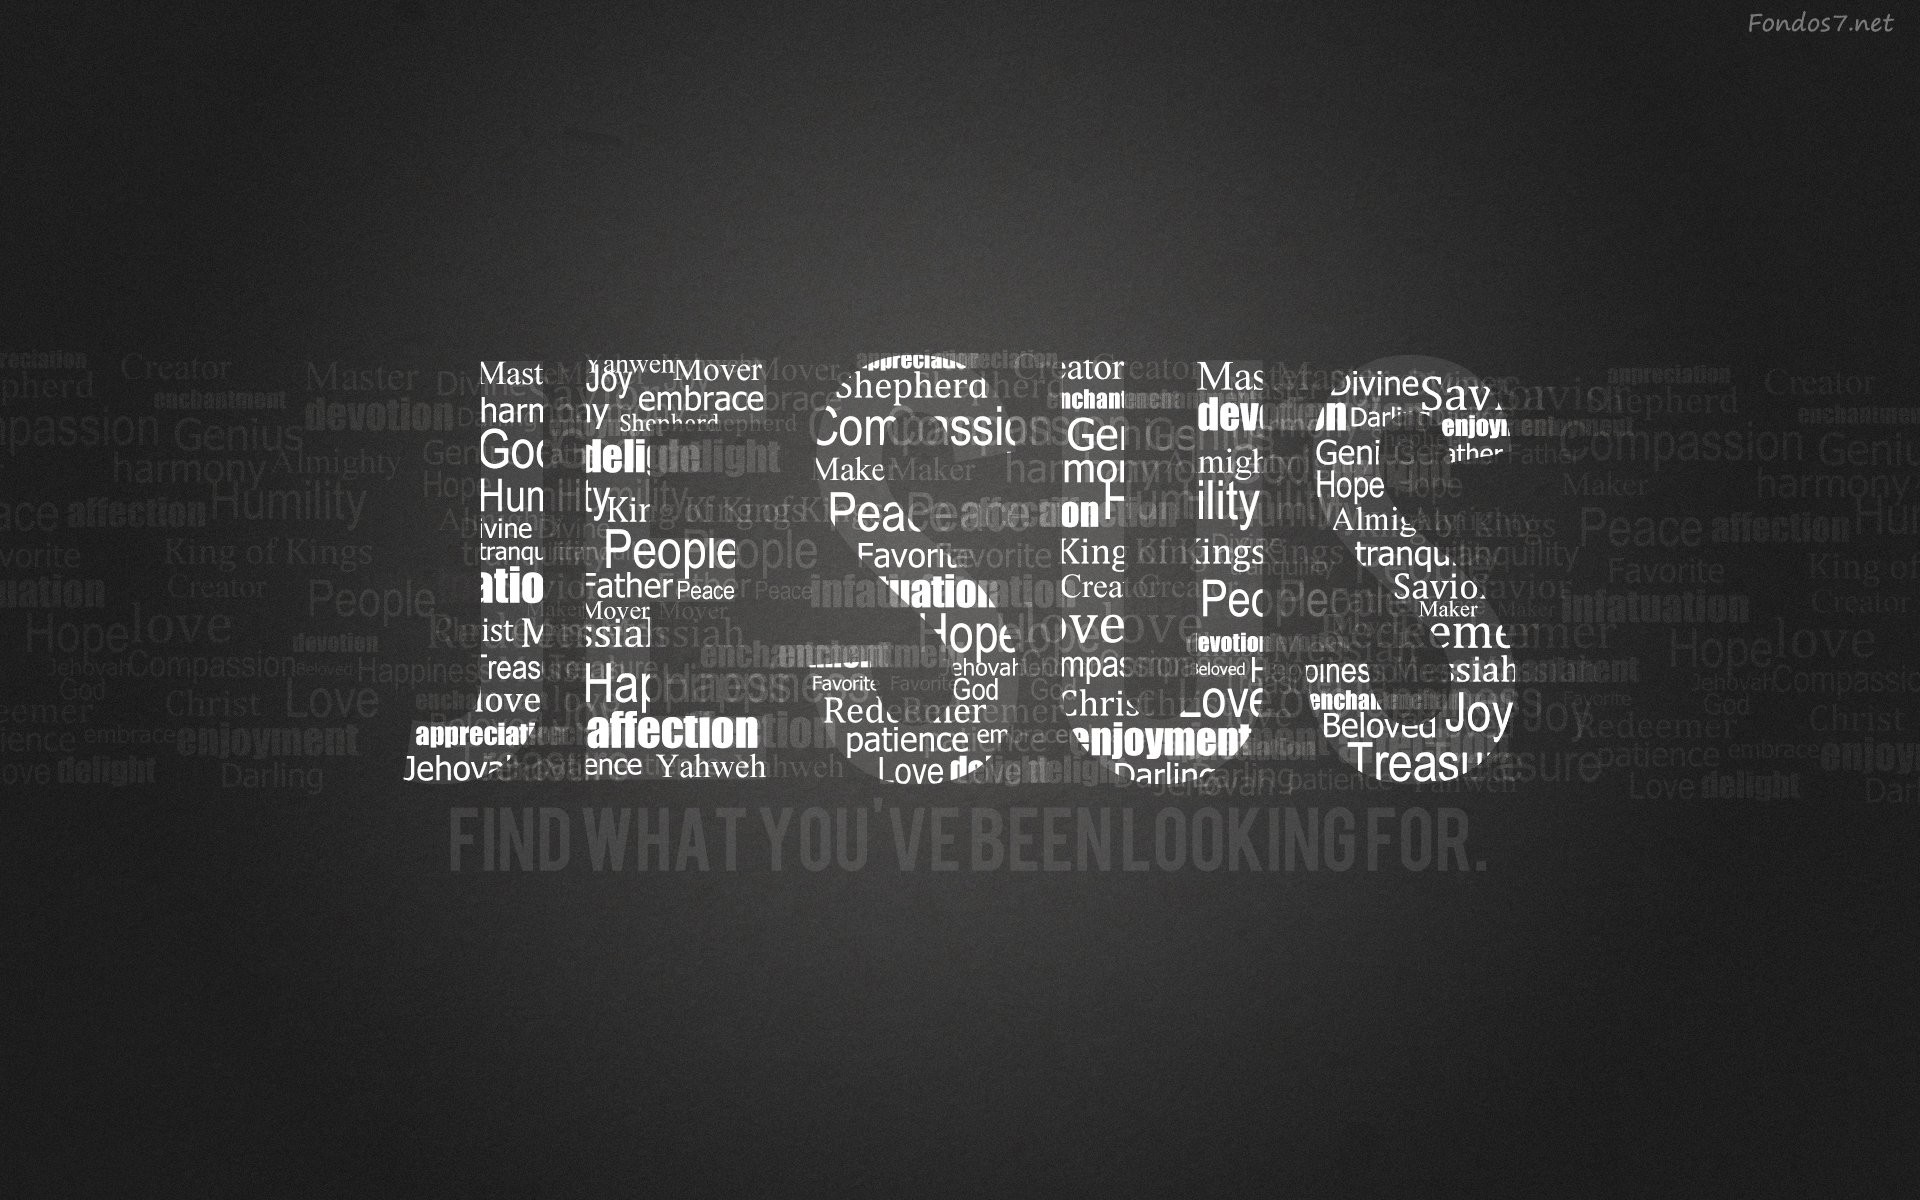 61+] Jesus Desktop Background - WallpaperSafari